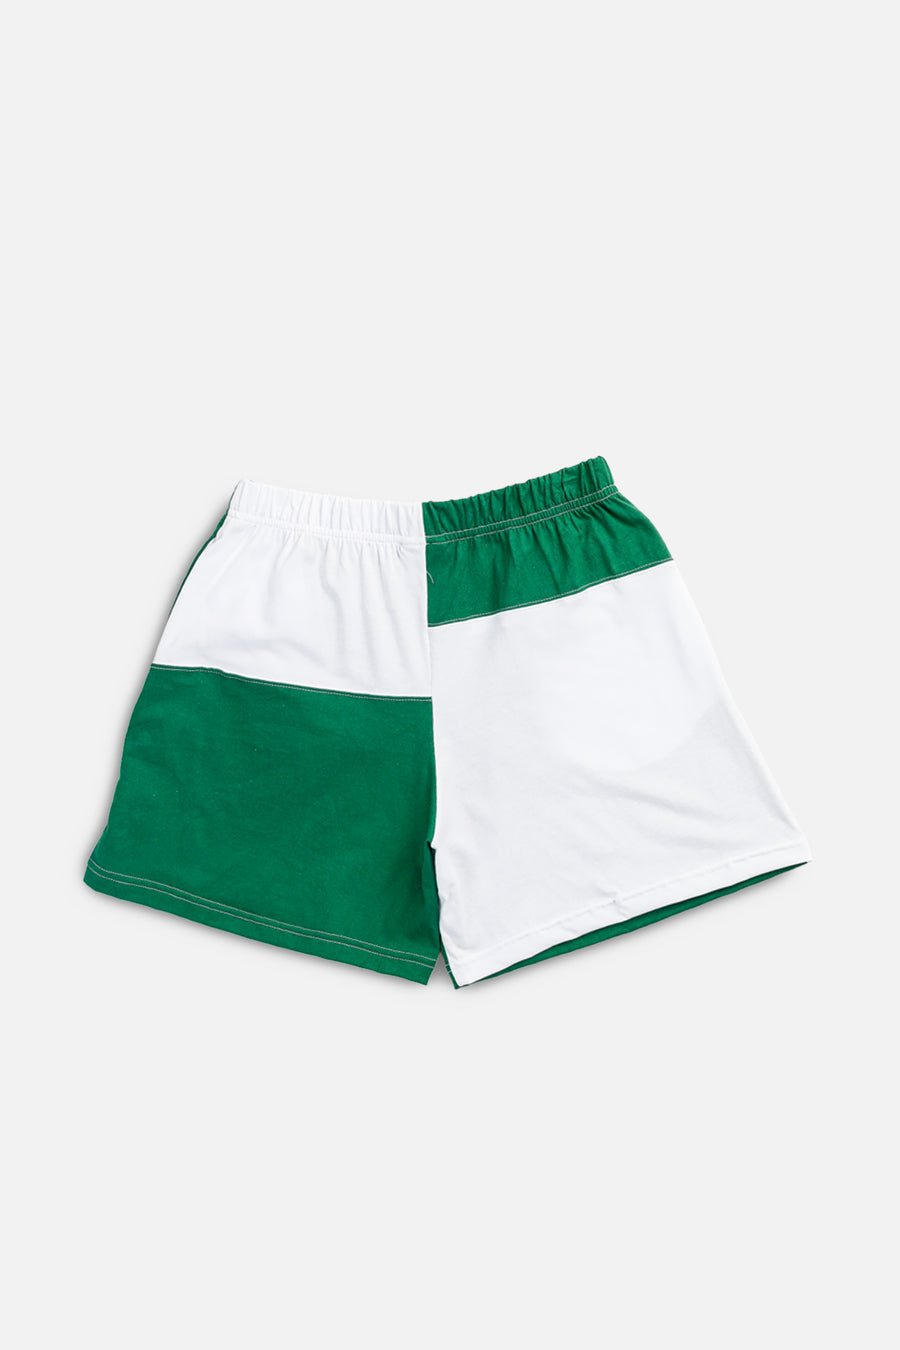 Unisex Rework Notre Dame Patchwork Tee Shorts - S